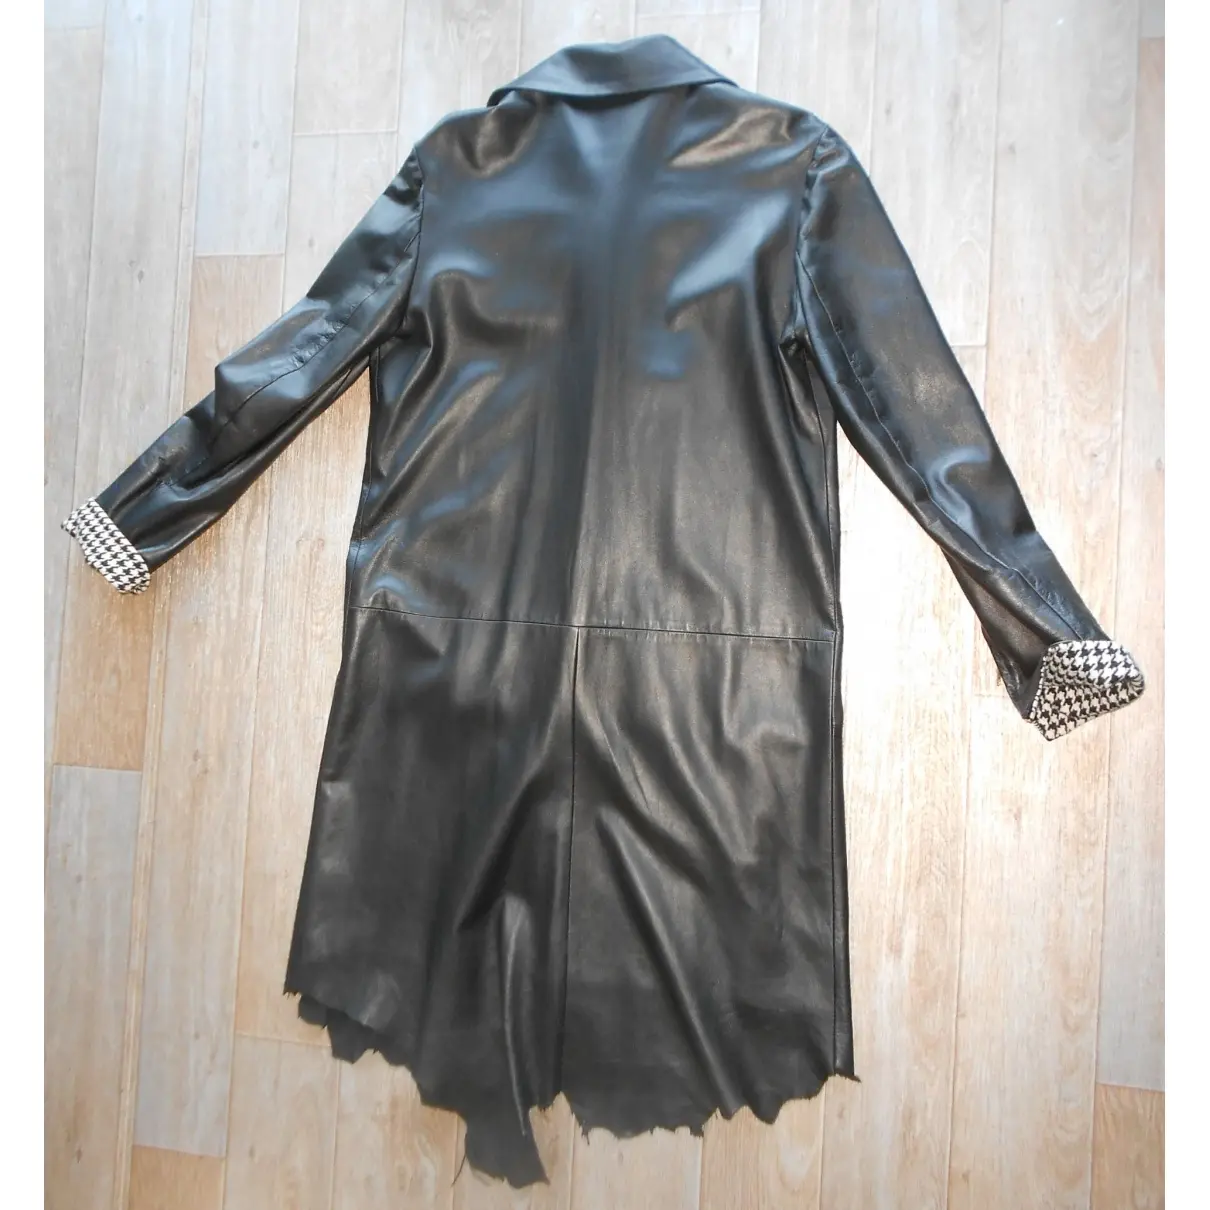 Yohji Yamamoto Leather coat for sale - Vintage